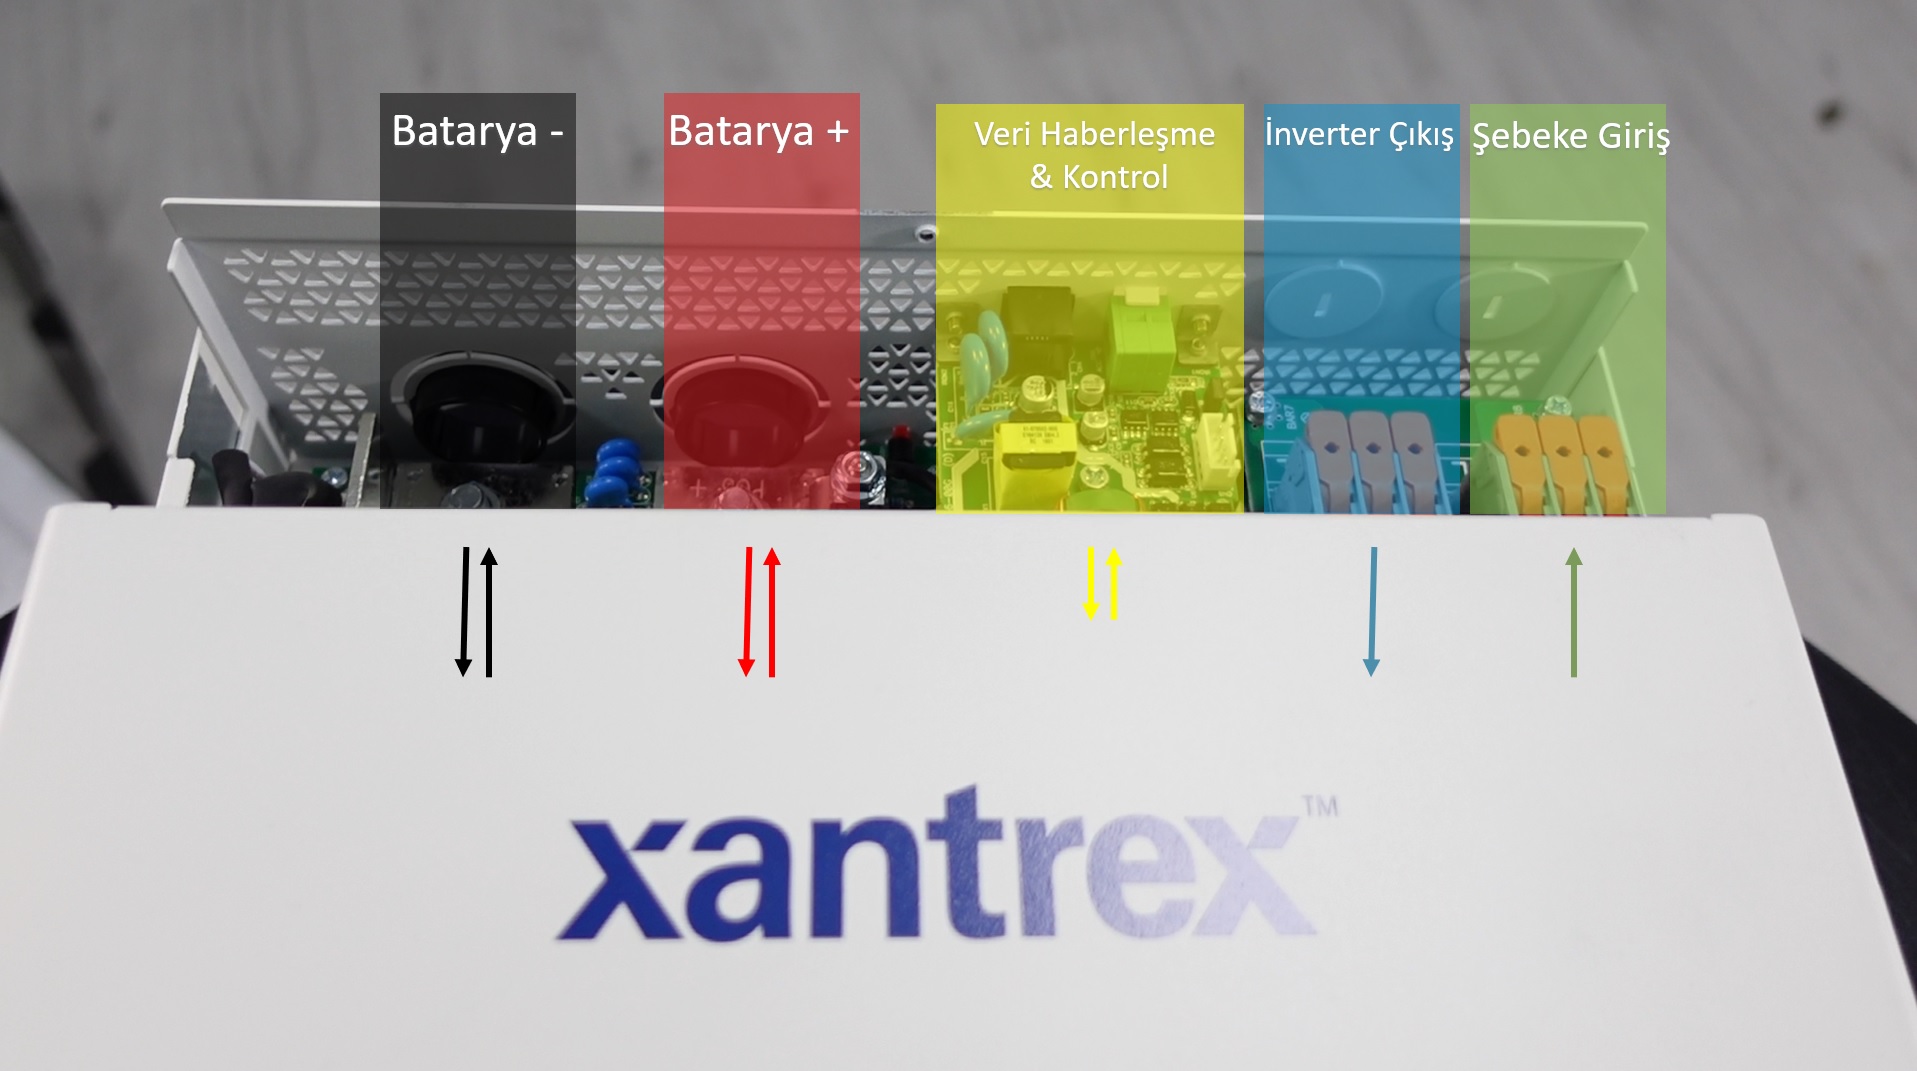 xantrex freedom xc 2000 bağlantı noktaları